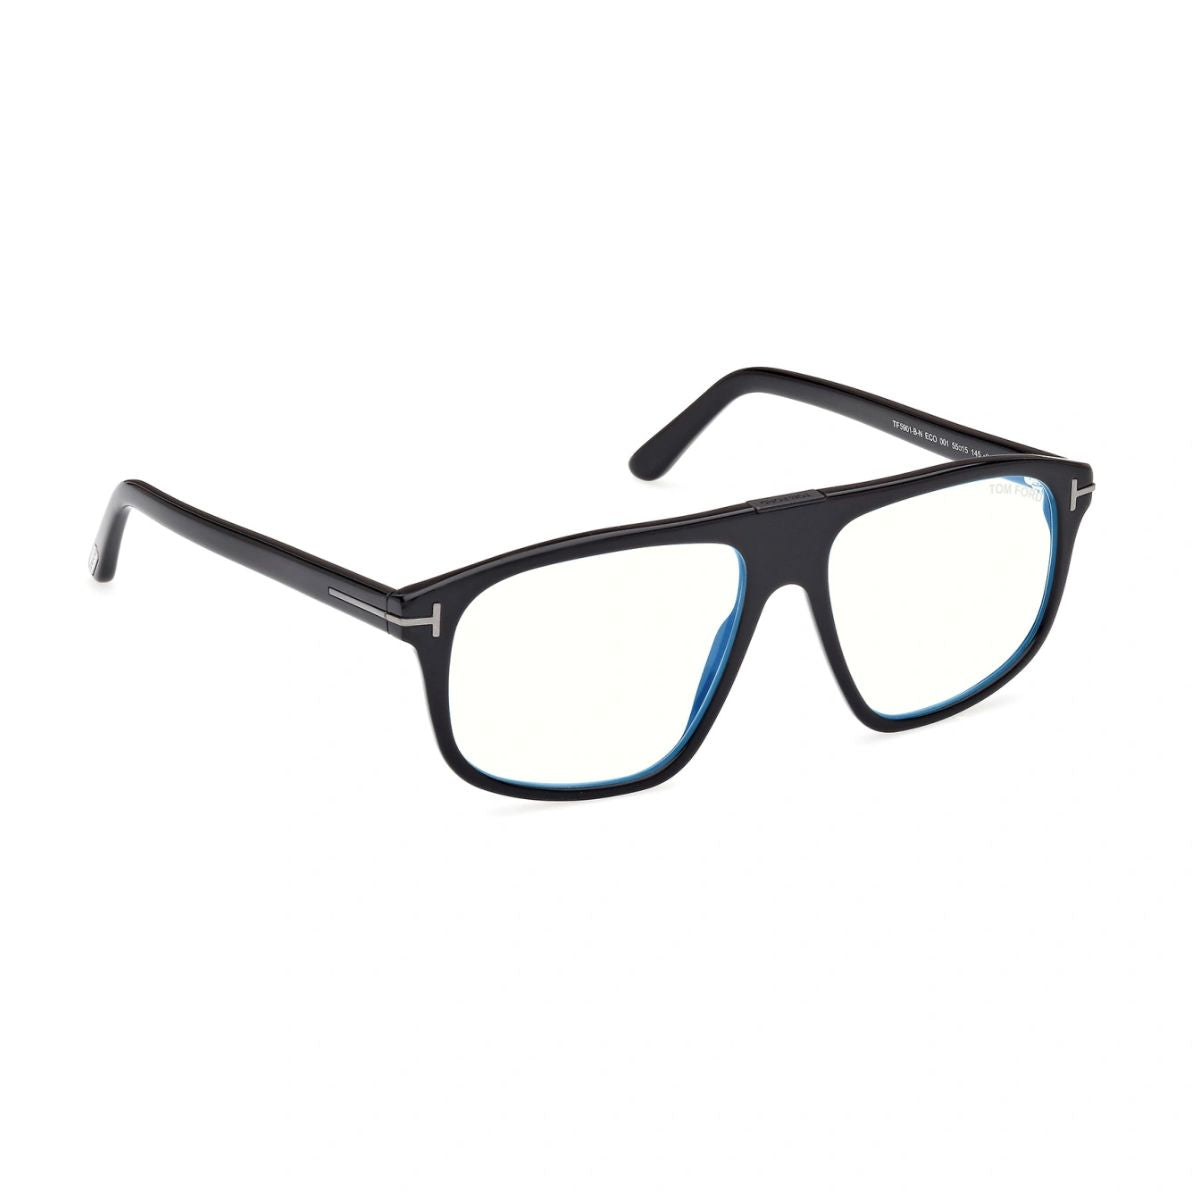 "Shop Stylish Square Eyeglasses Form Tom Ford For Men's At Optorium"